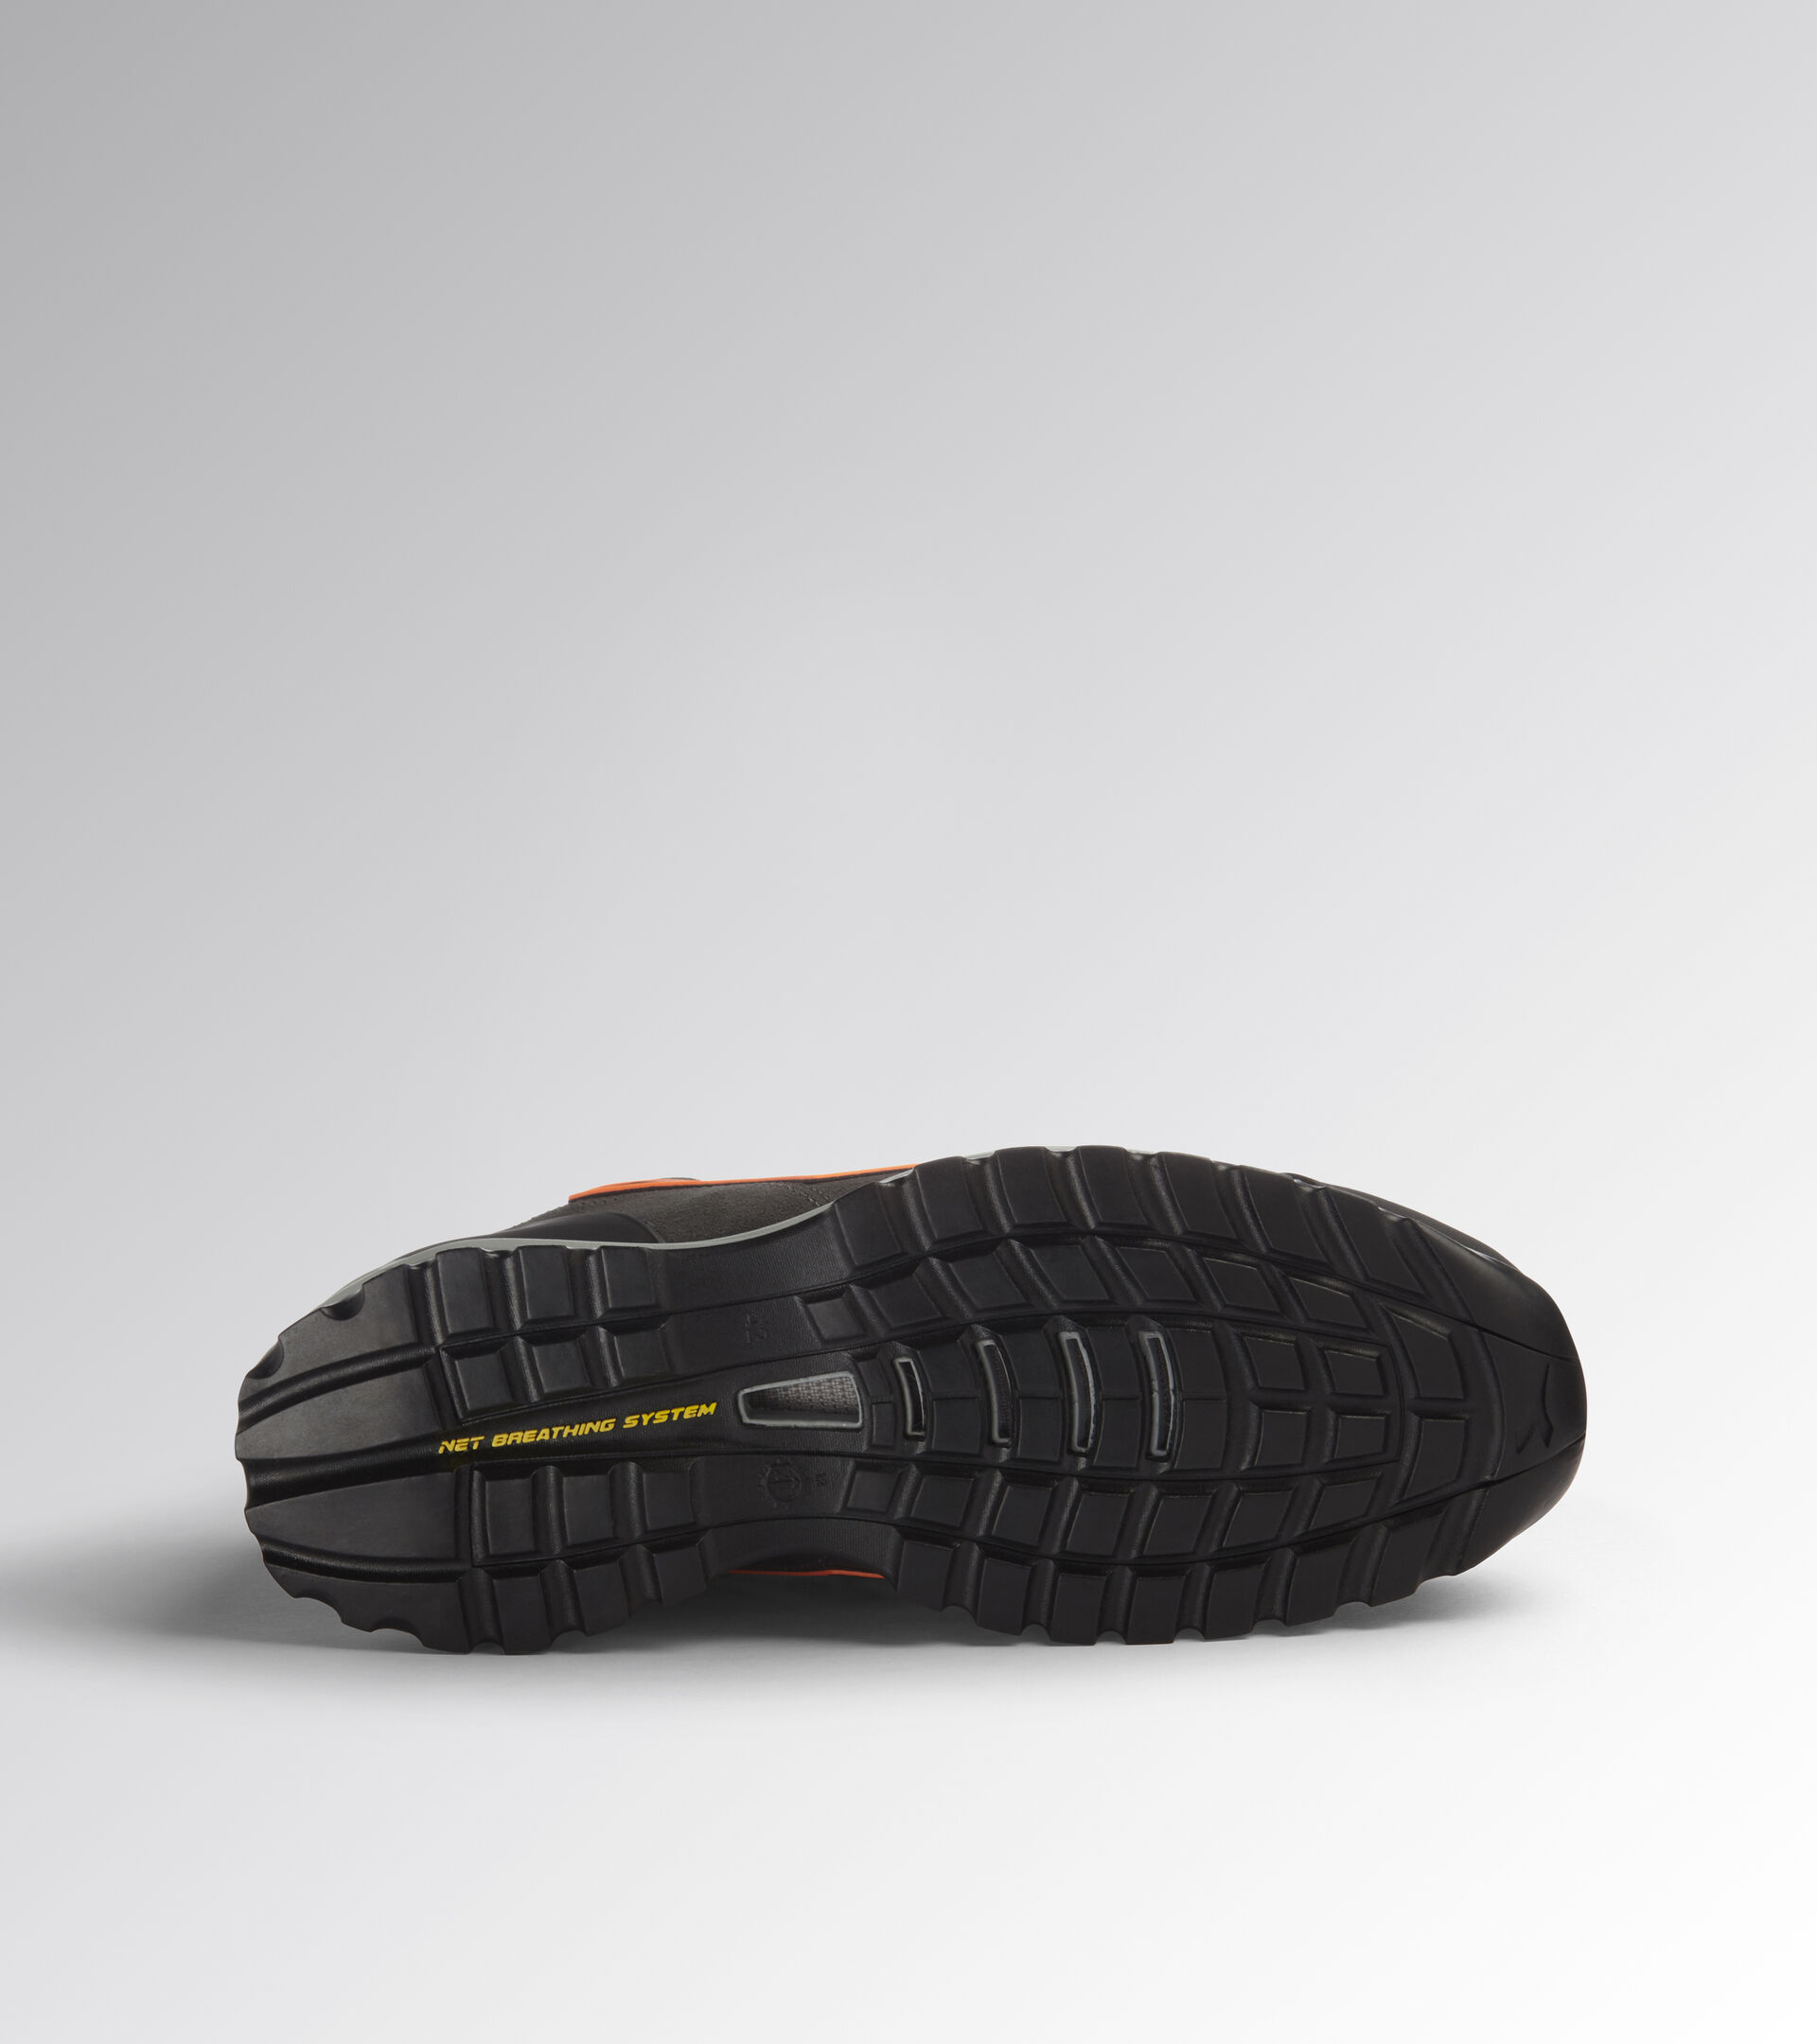 GLOVE NET LOW PRO HRO Store safety Low Online Utility SRA shoe Diadora ESD S3 